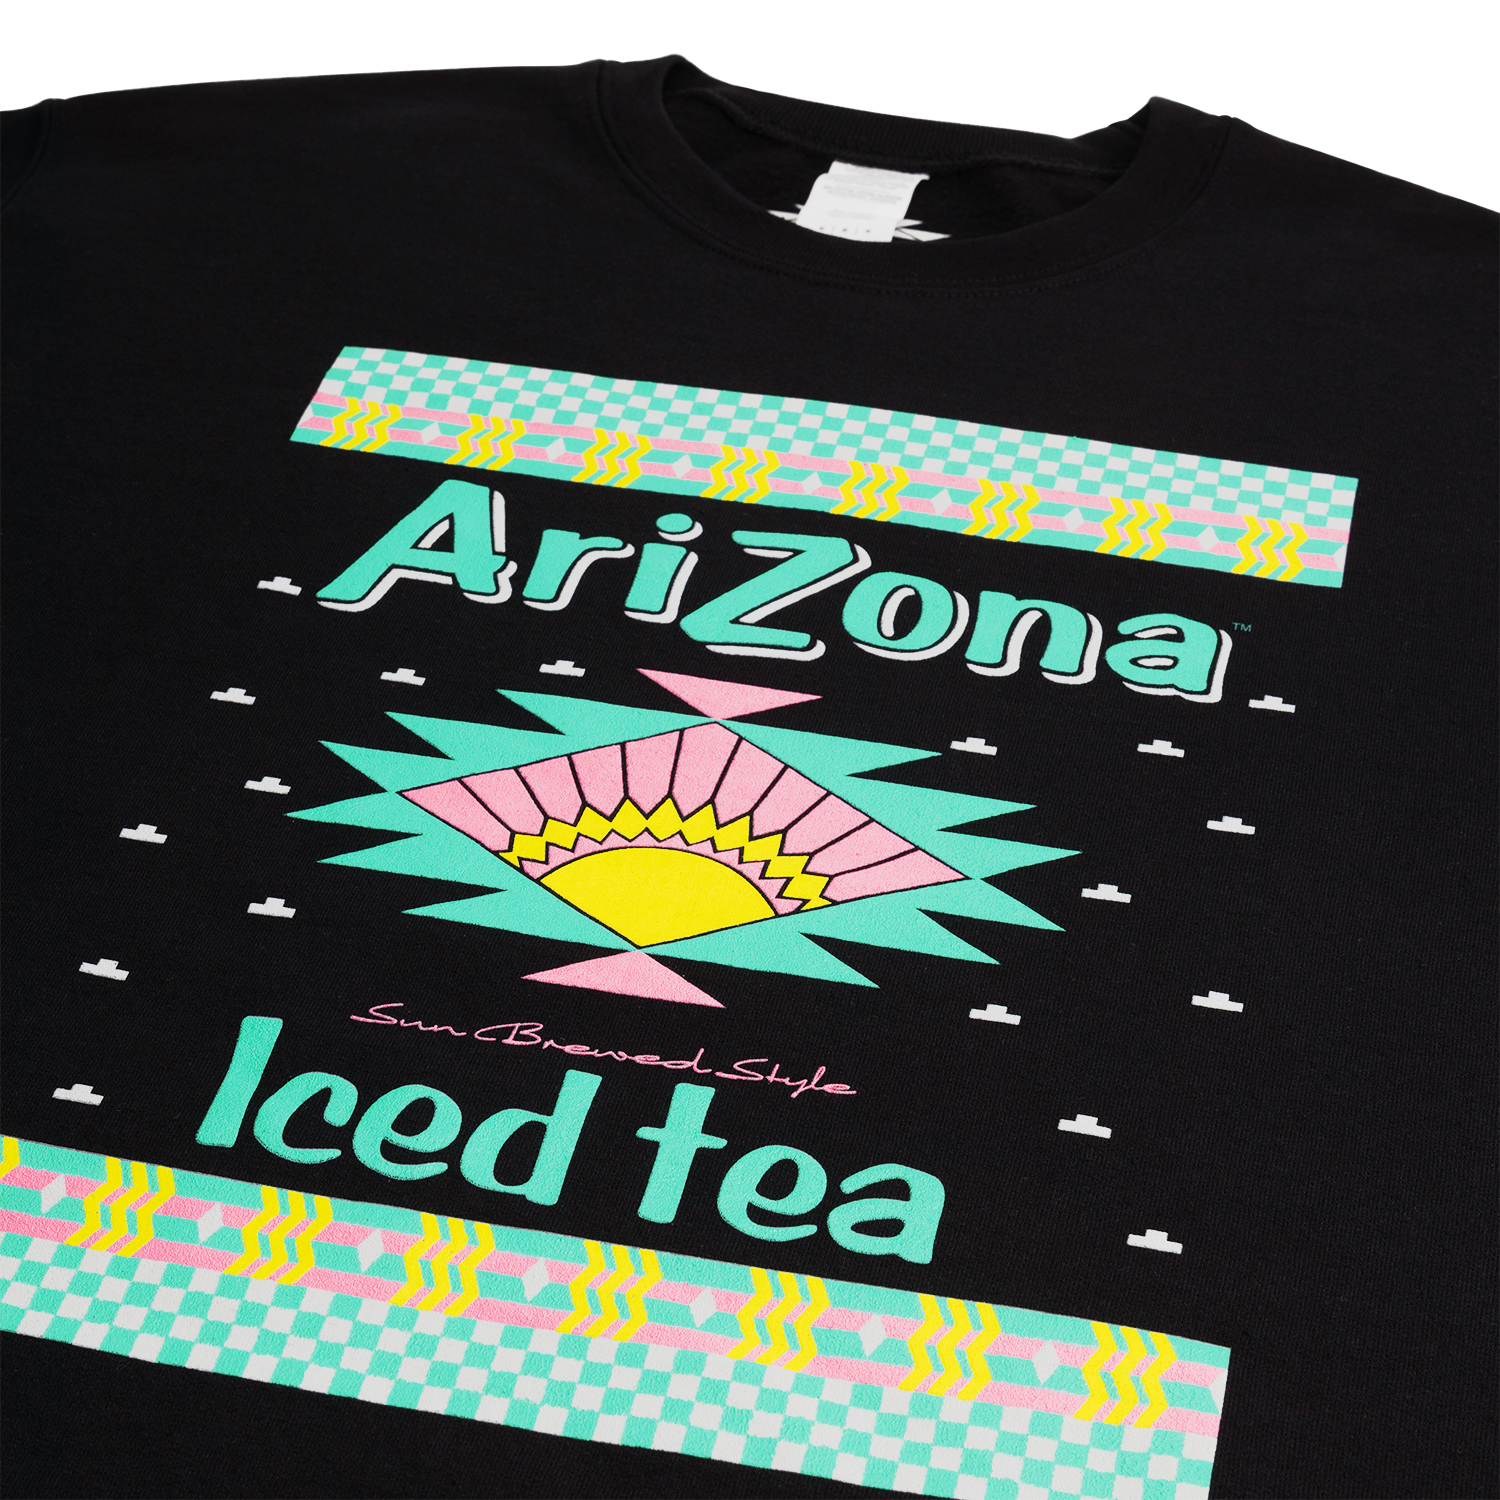 AriZona Iced Tea AriZona – Europe Sweater Black